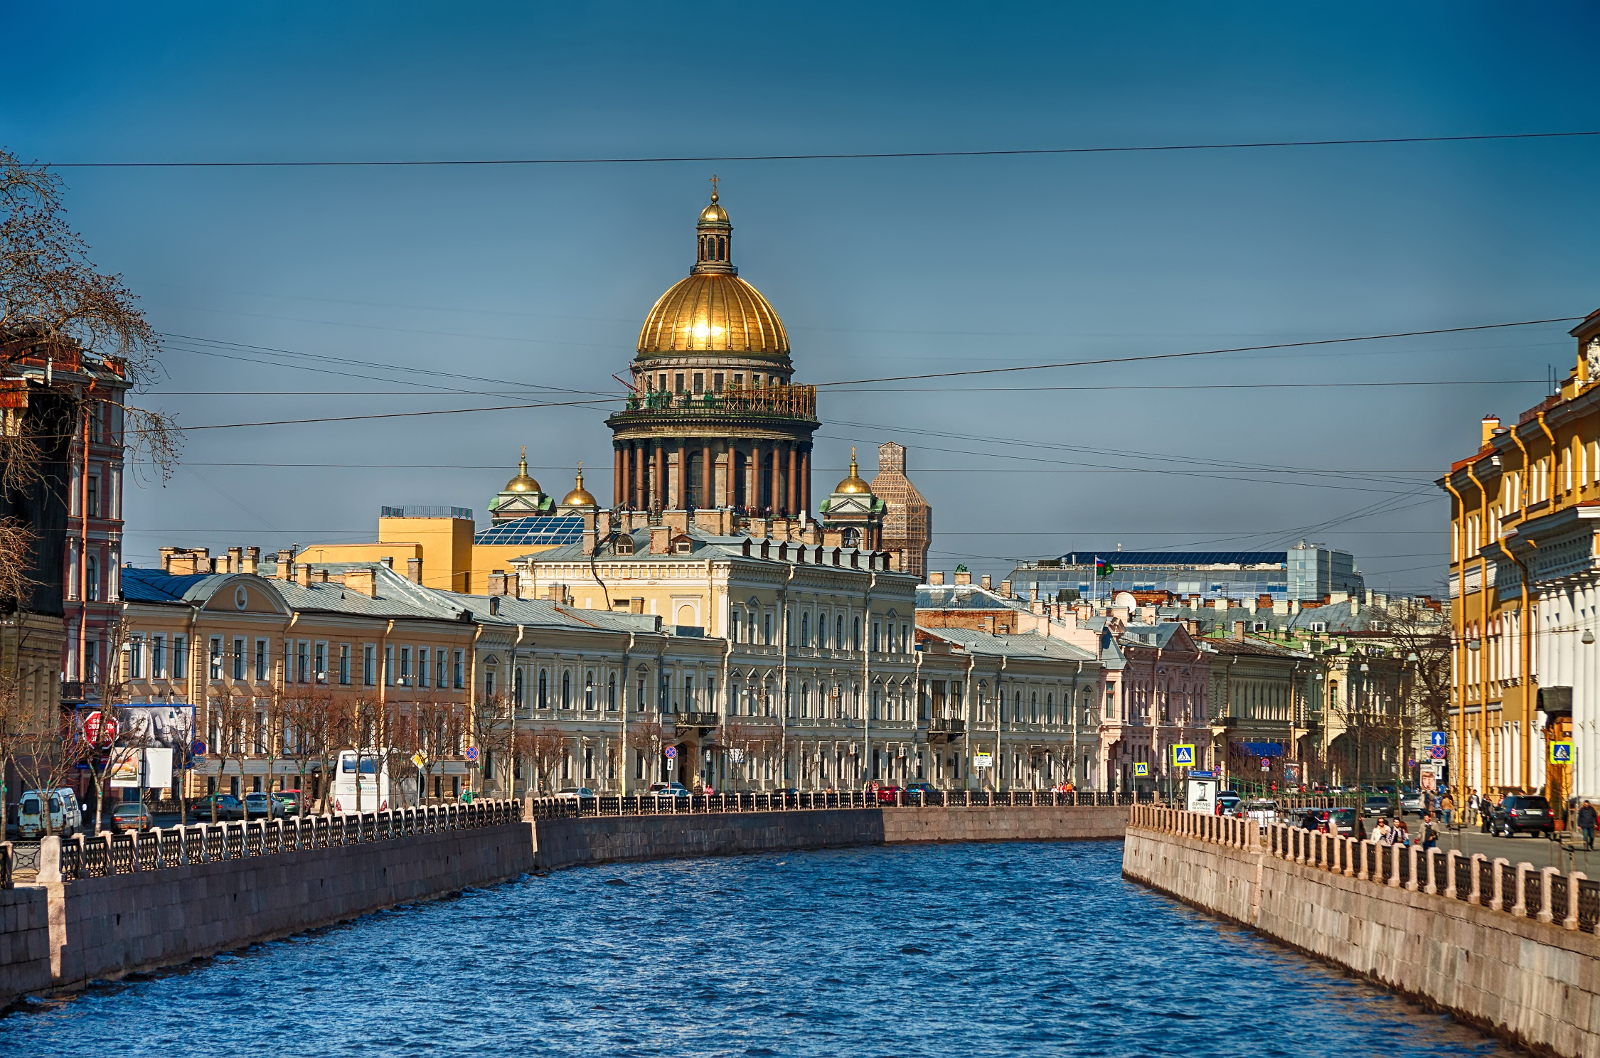 Russia, 19-26 luglio - Mosca e San Pietroburgo: bellezze a confronto